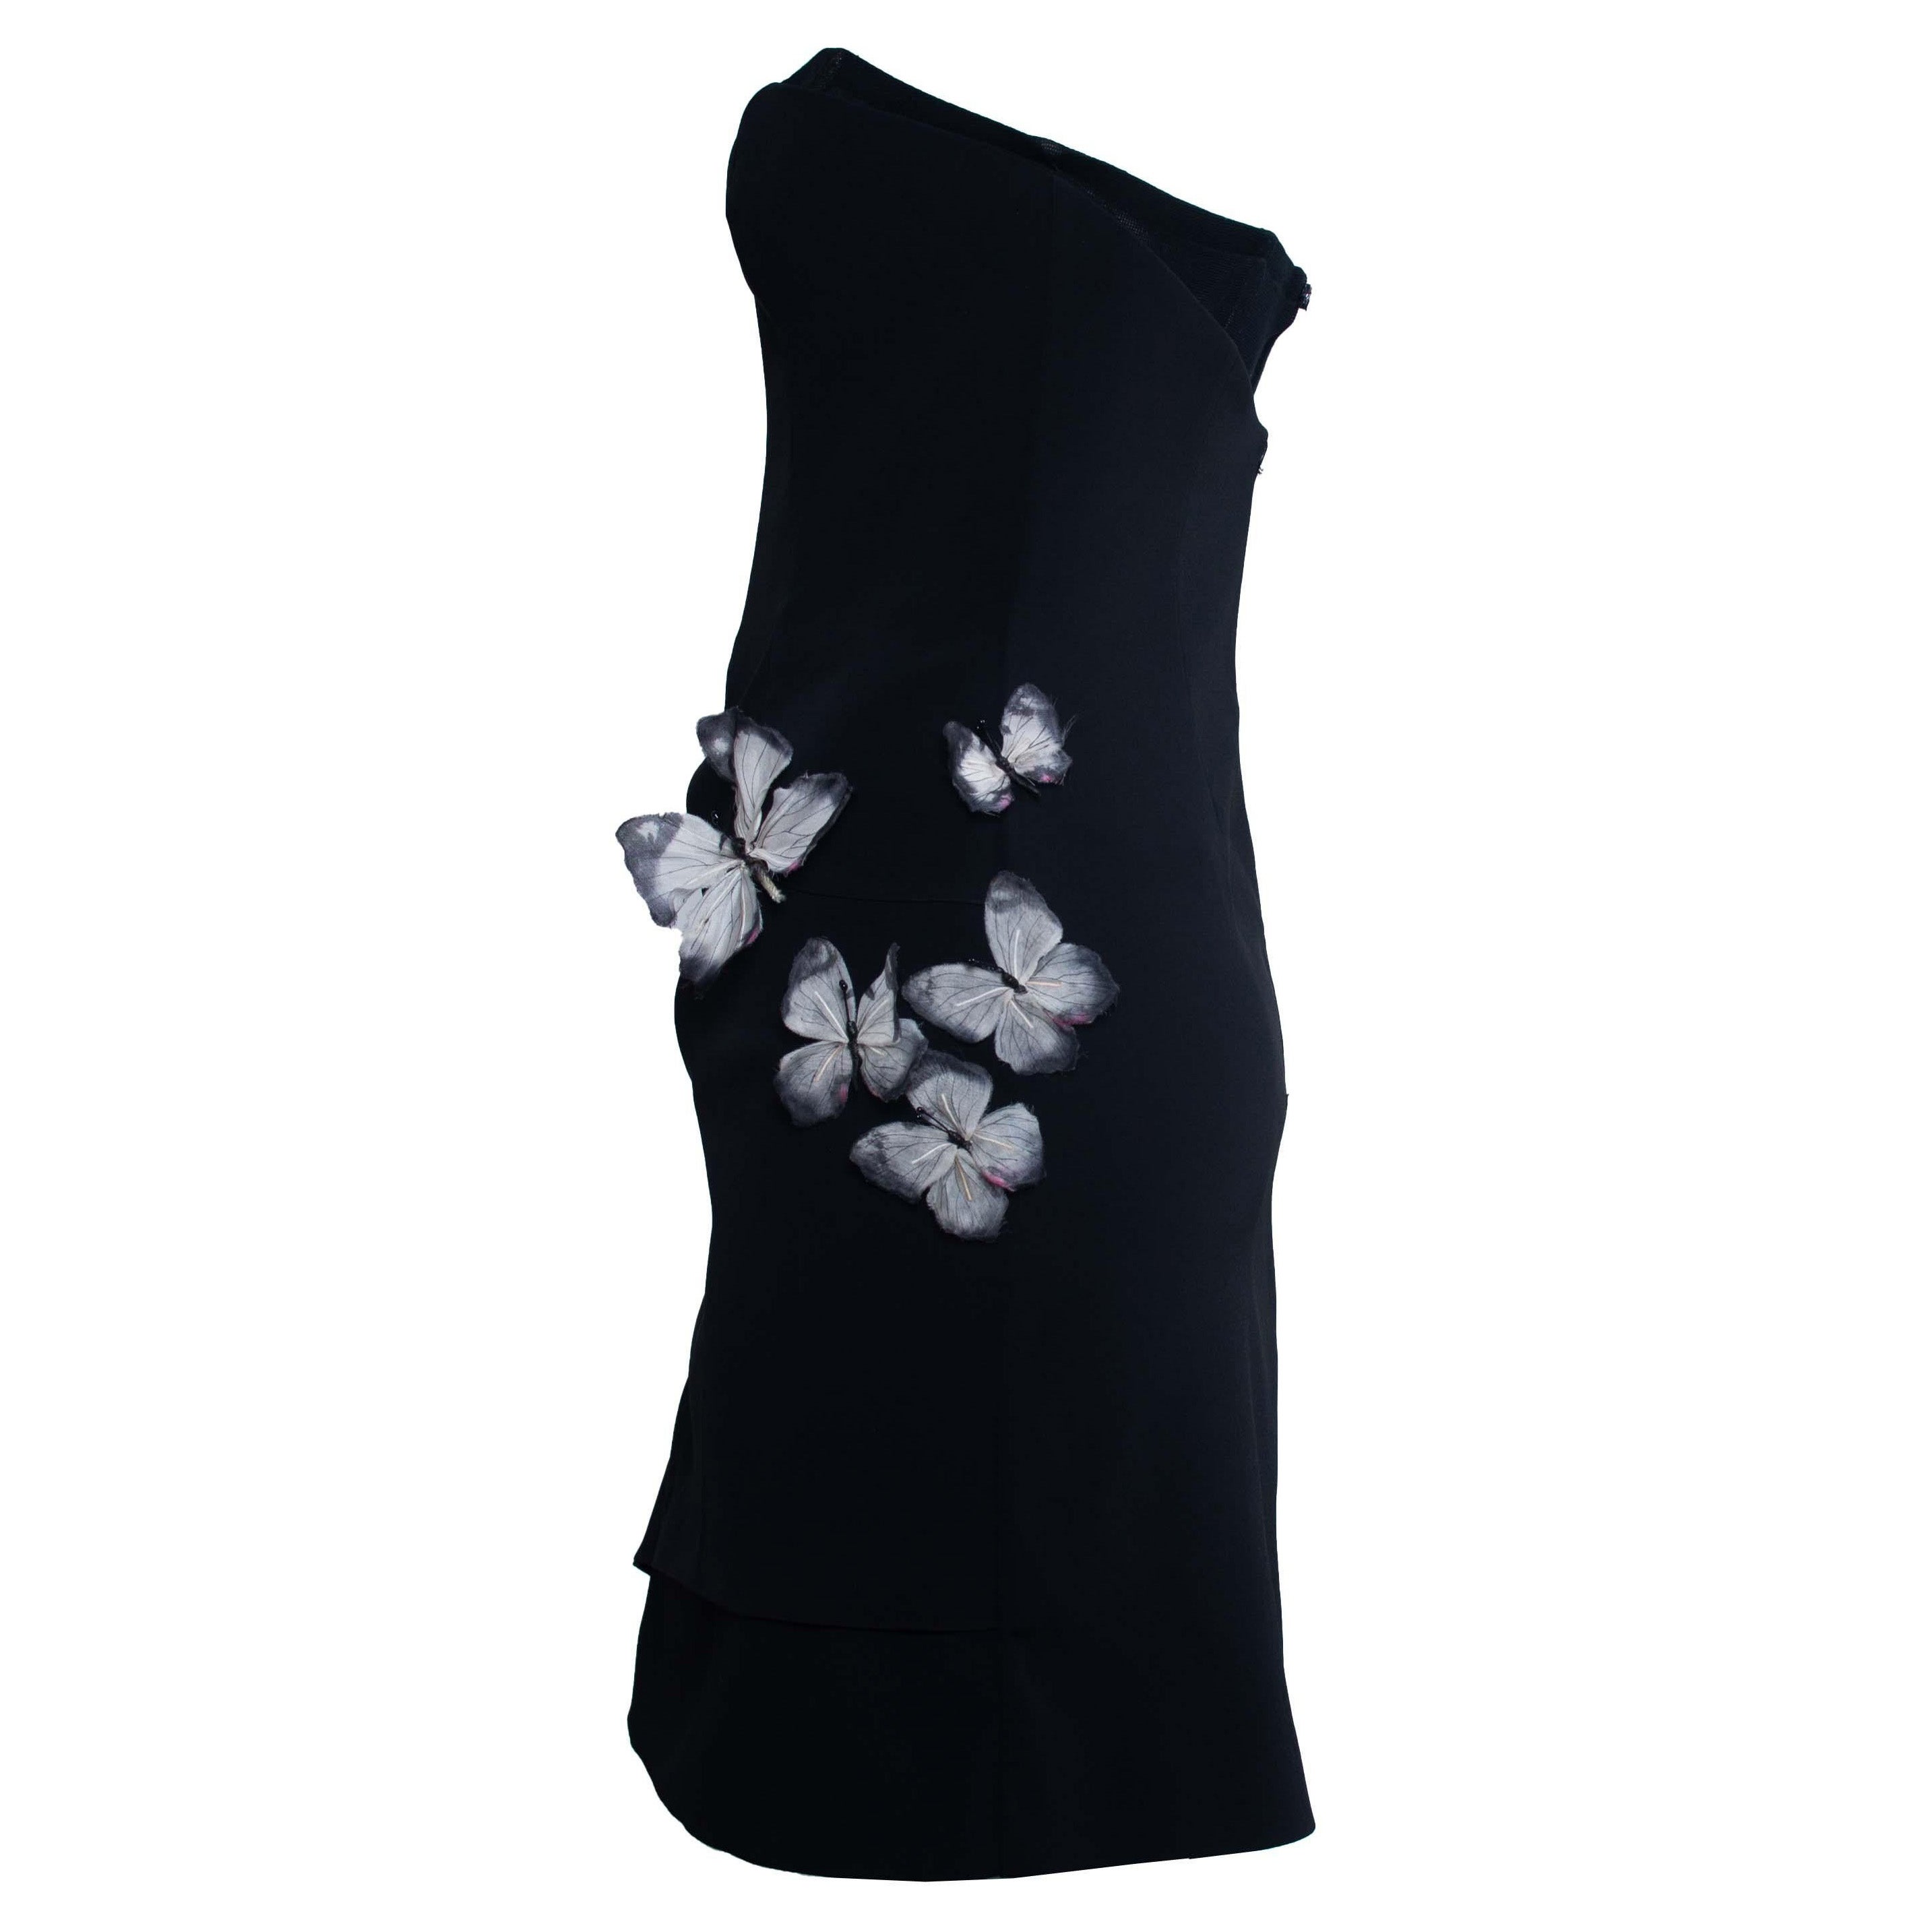 S/S 1998 Dolce & Gabbana Butterfly Corset Black Mini Dress Stromboli Collection